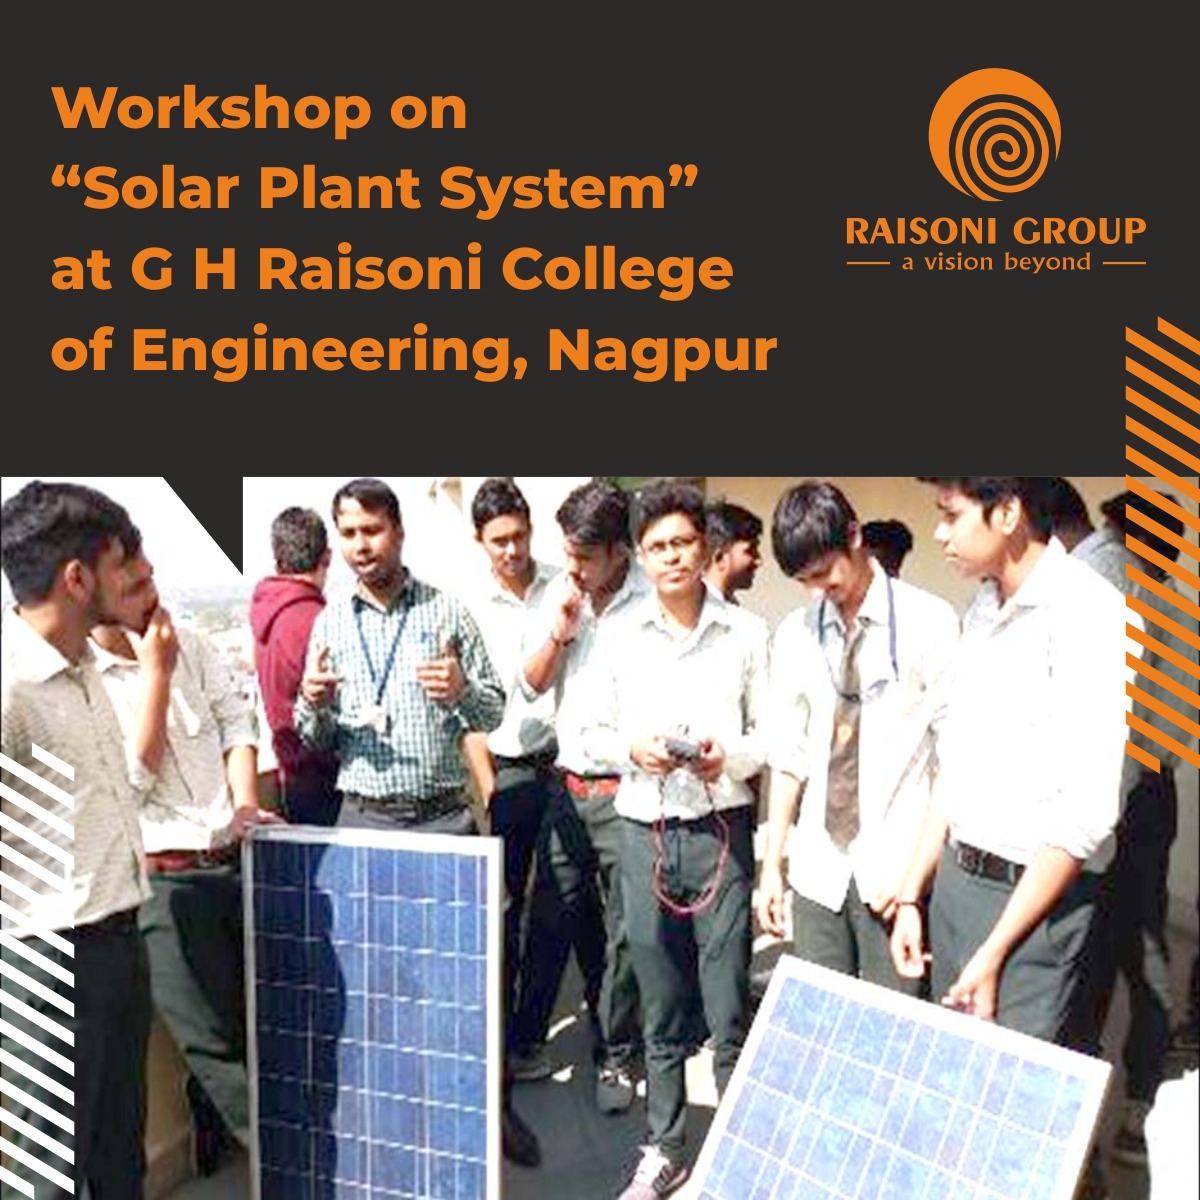 Workshop on 'Solar Plant System' at G H Raisoni College of Engineering, Nagpur
#ghraisoni #raisoni #rgi #raisonigroupofinstitution #ghrce #electricalengineering #Workshop #CollegeEvent #solarplant #powerengineering #energyaudit #soalarpanel #bestinfrastructure #bestcollege